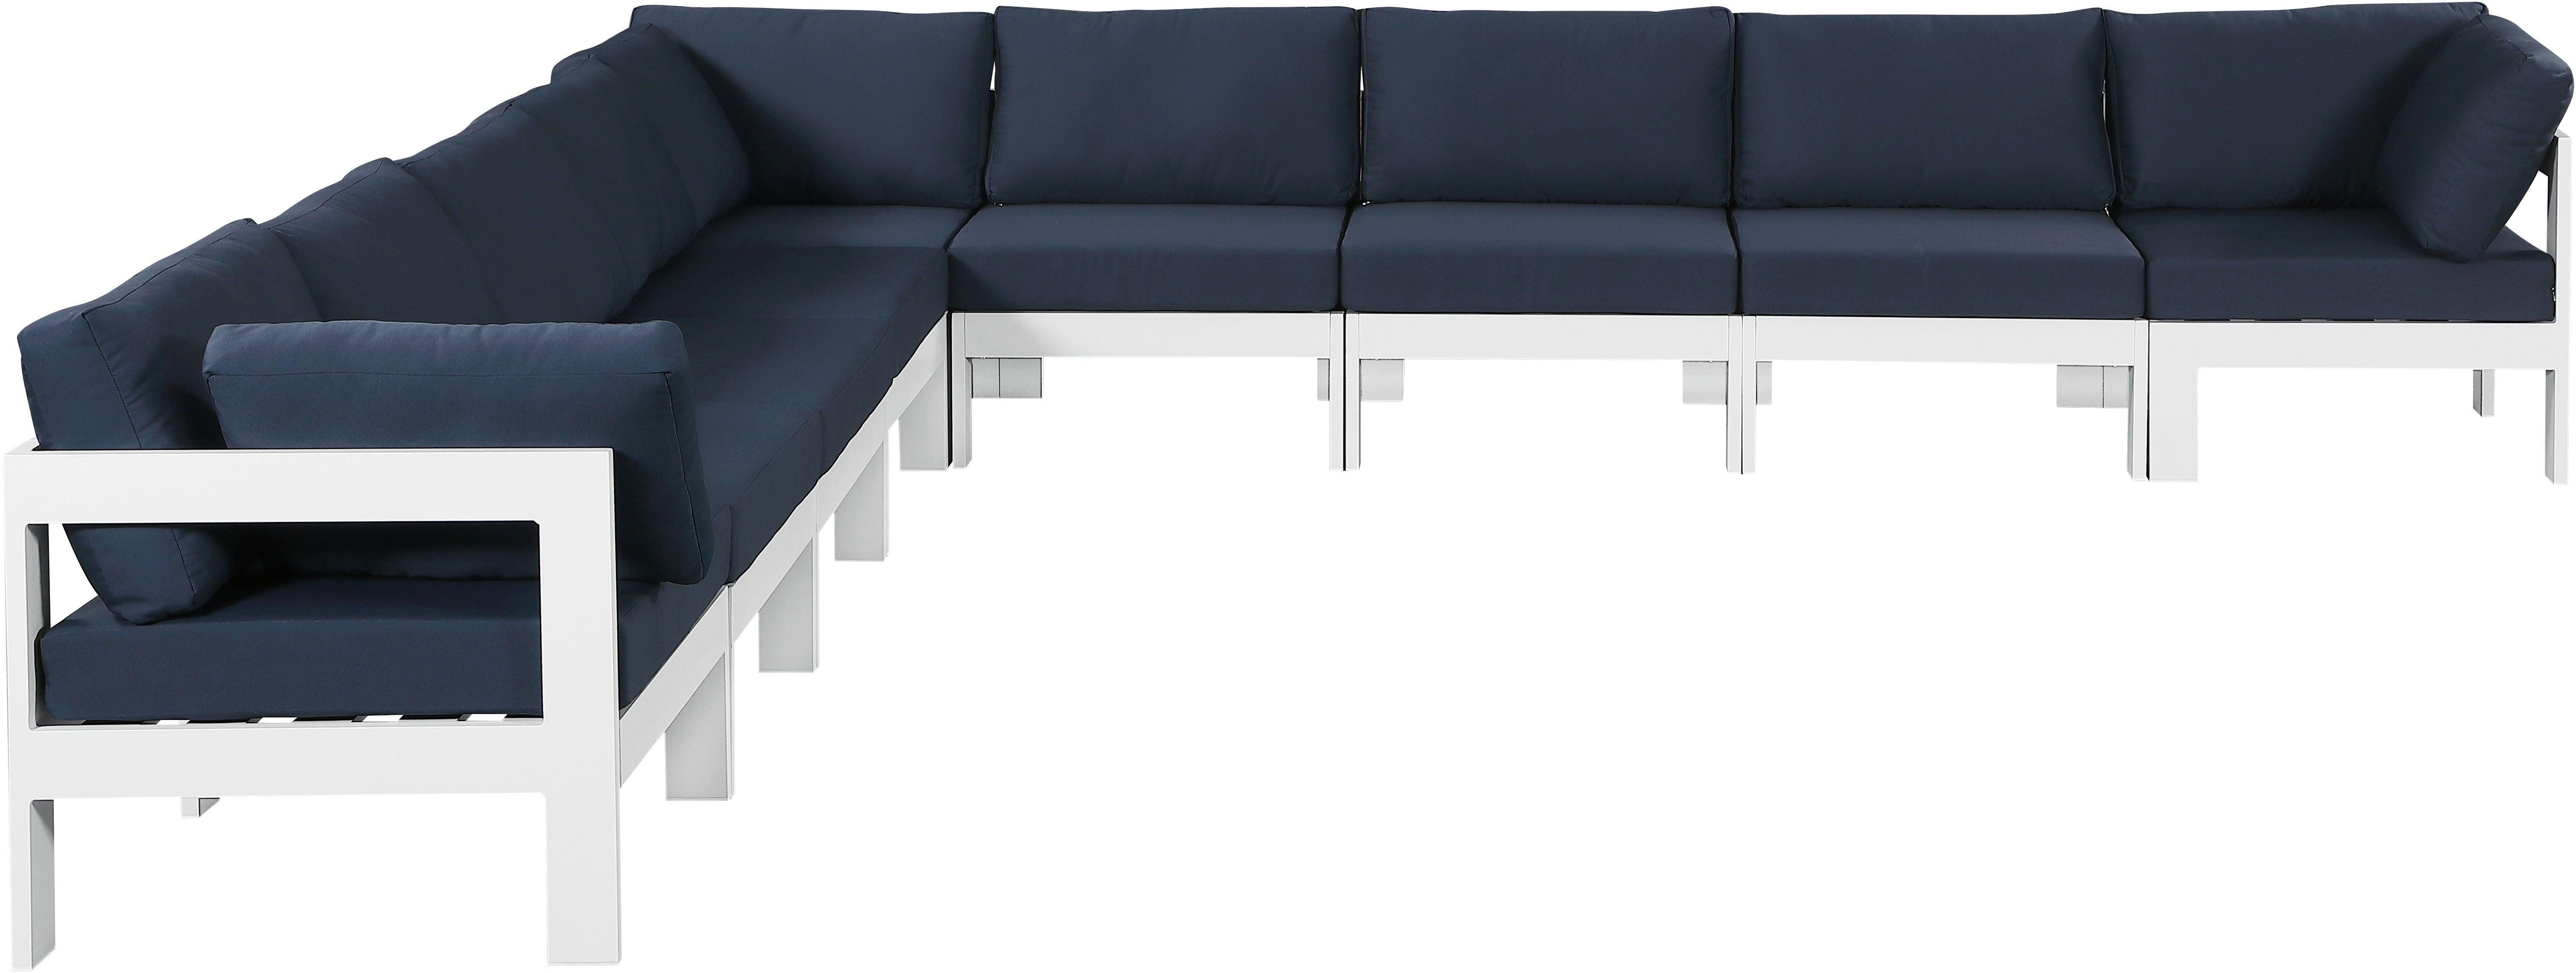 Meridian Furniture - Nizuc - Outdoor Patio Modular Sectional 9 Piece - Navy - 5th Avenue Furniture